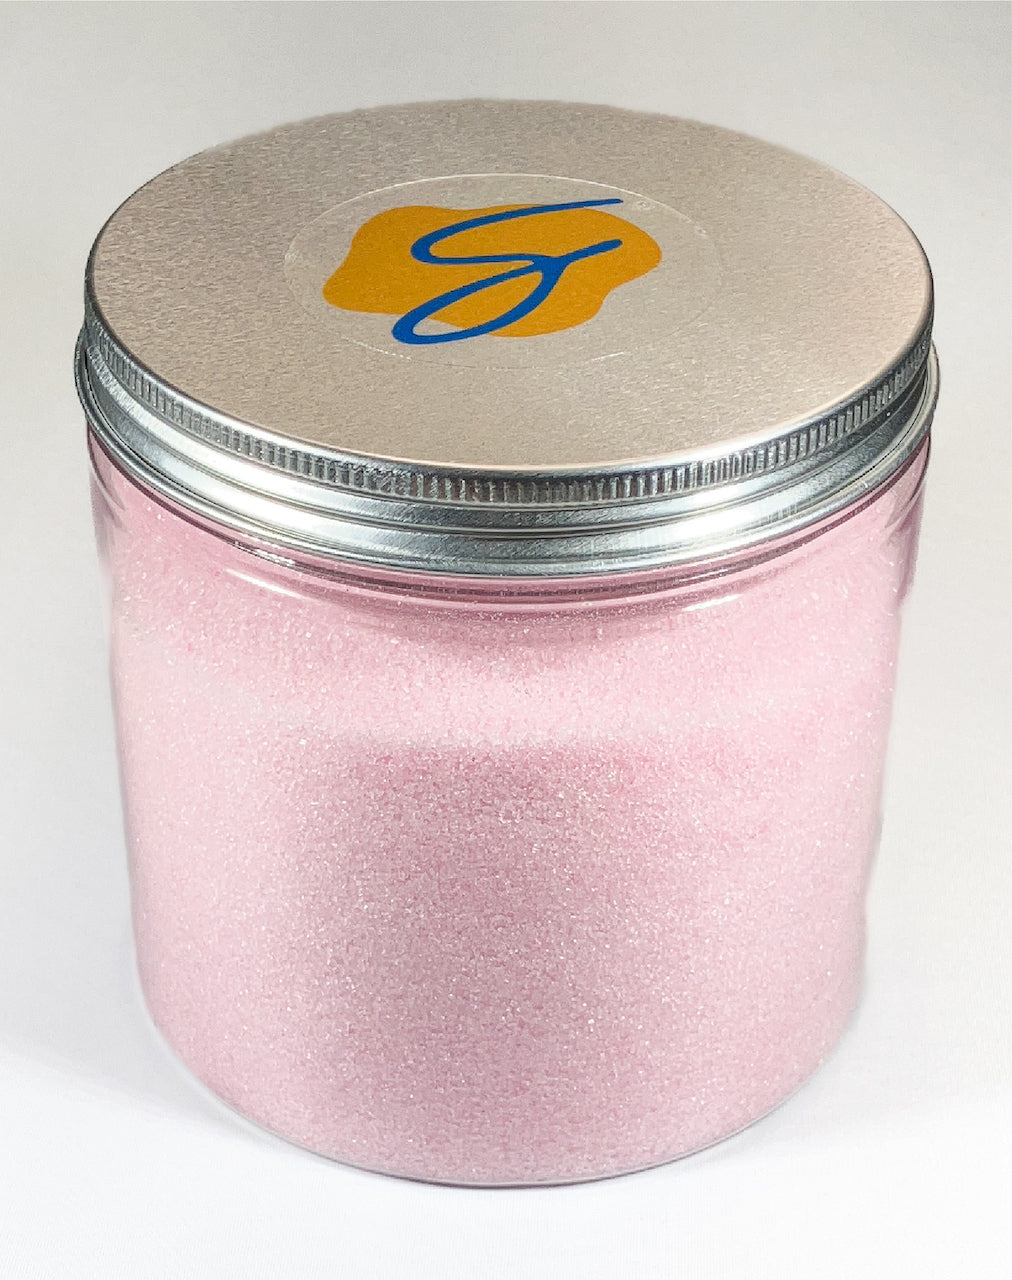 One lb jar of Supreme Cotton Candy Sugar of Pink Strawberry 粉紅士多啤梨/草莓味棉花糖砂糖